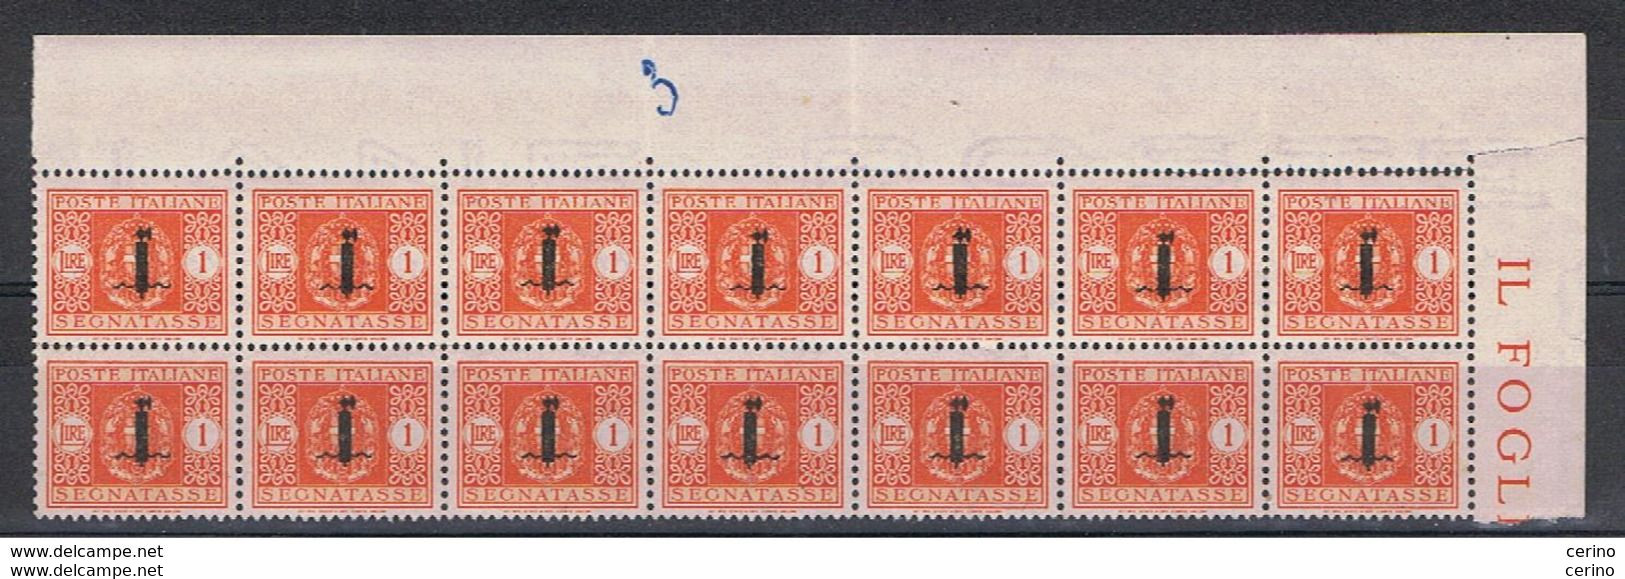 R.S.I.:  1944  TASSE  - £. 1  ARANCIO  BL. 14  N. -  DENTELLATURA  APERTA  IN  ALTO  A  DX. -   SASS. 68 - Postage Due